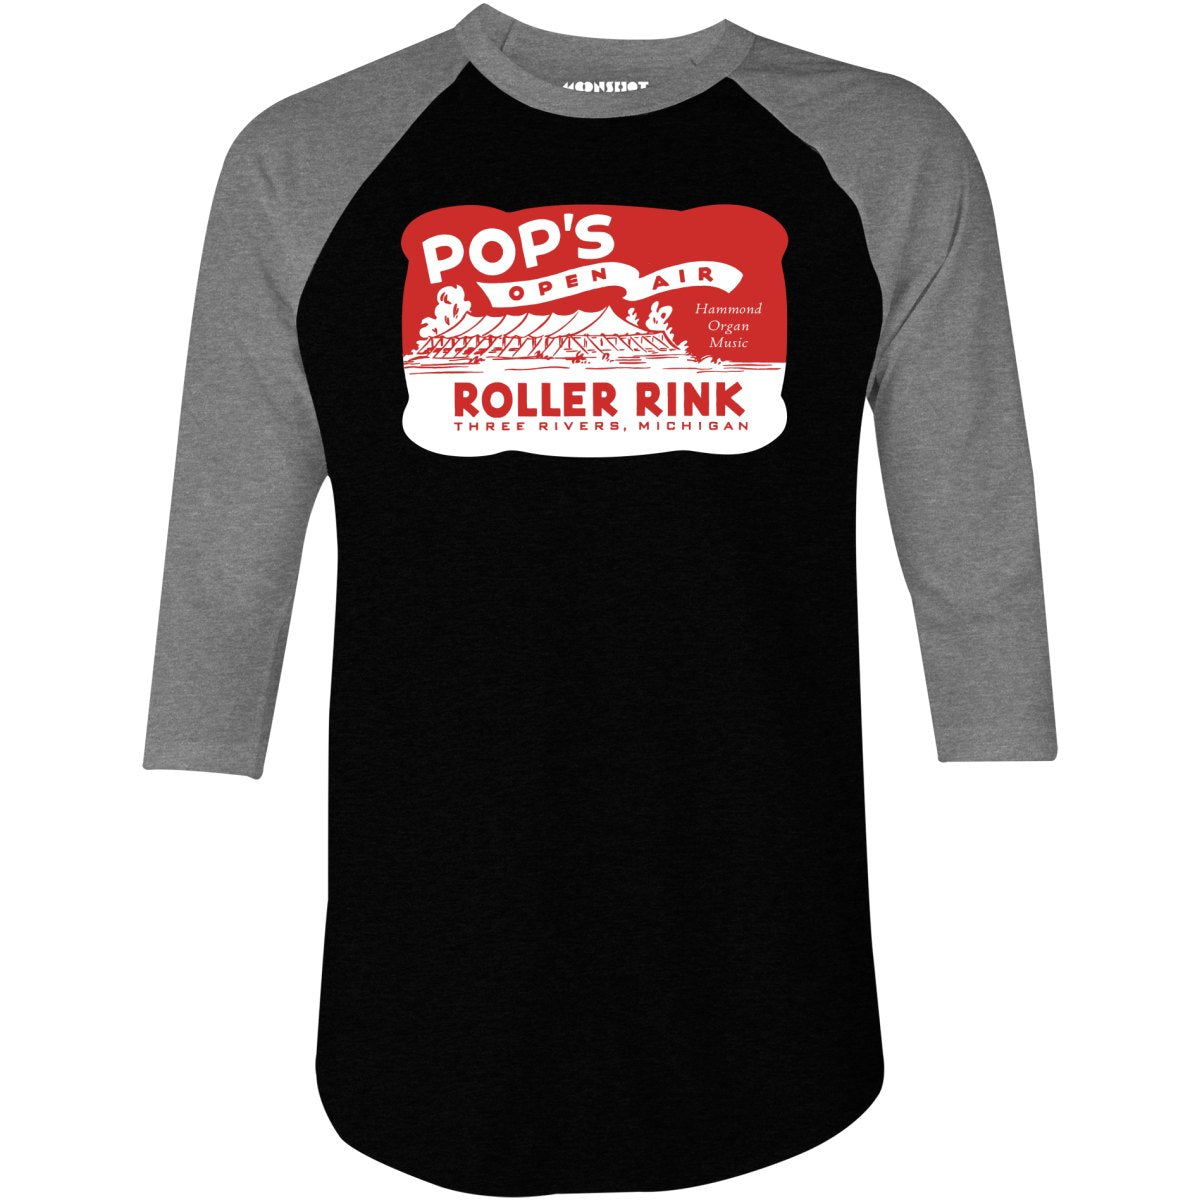 Pop's - Three Rivers, MI - Vintage Roller Rink - 3/4 Sleeve Raglan T-Shirt